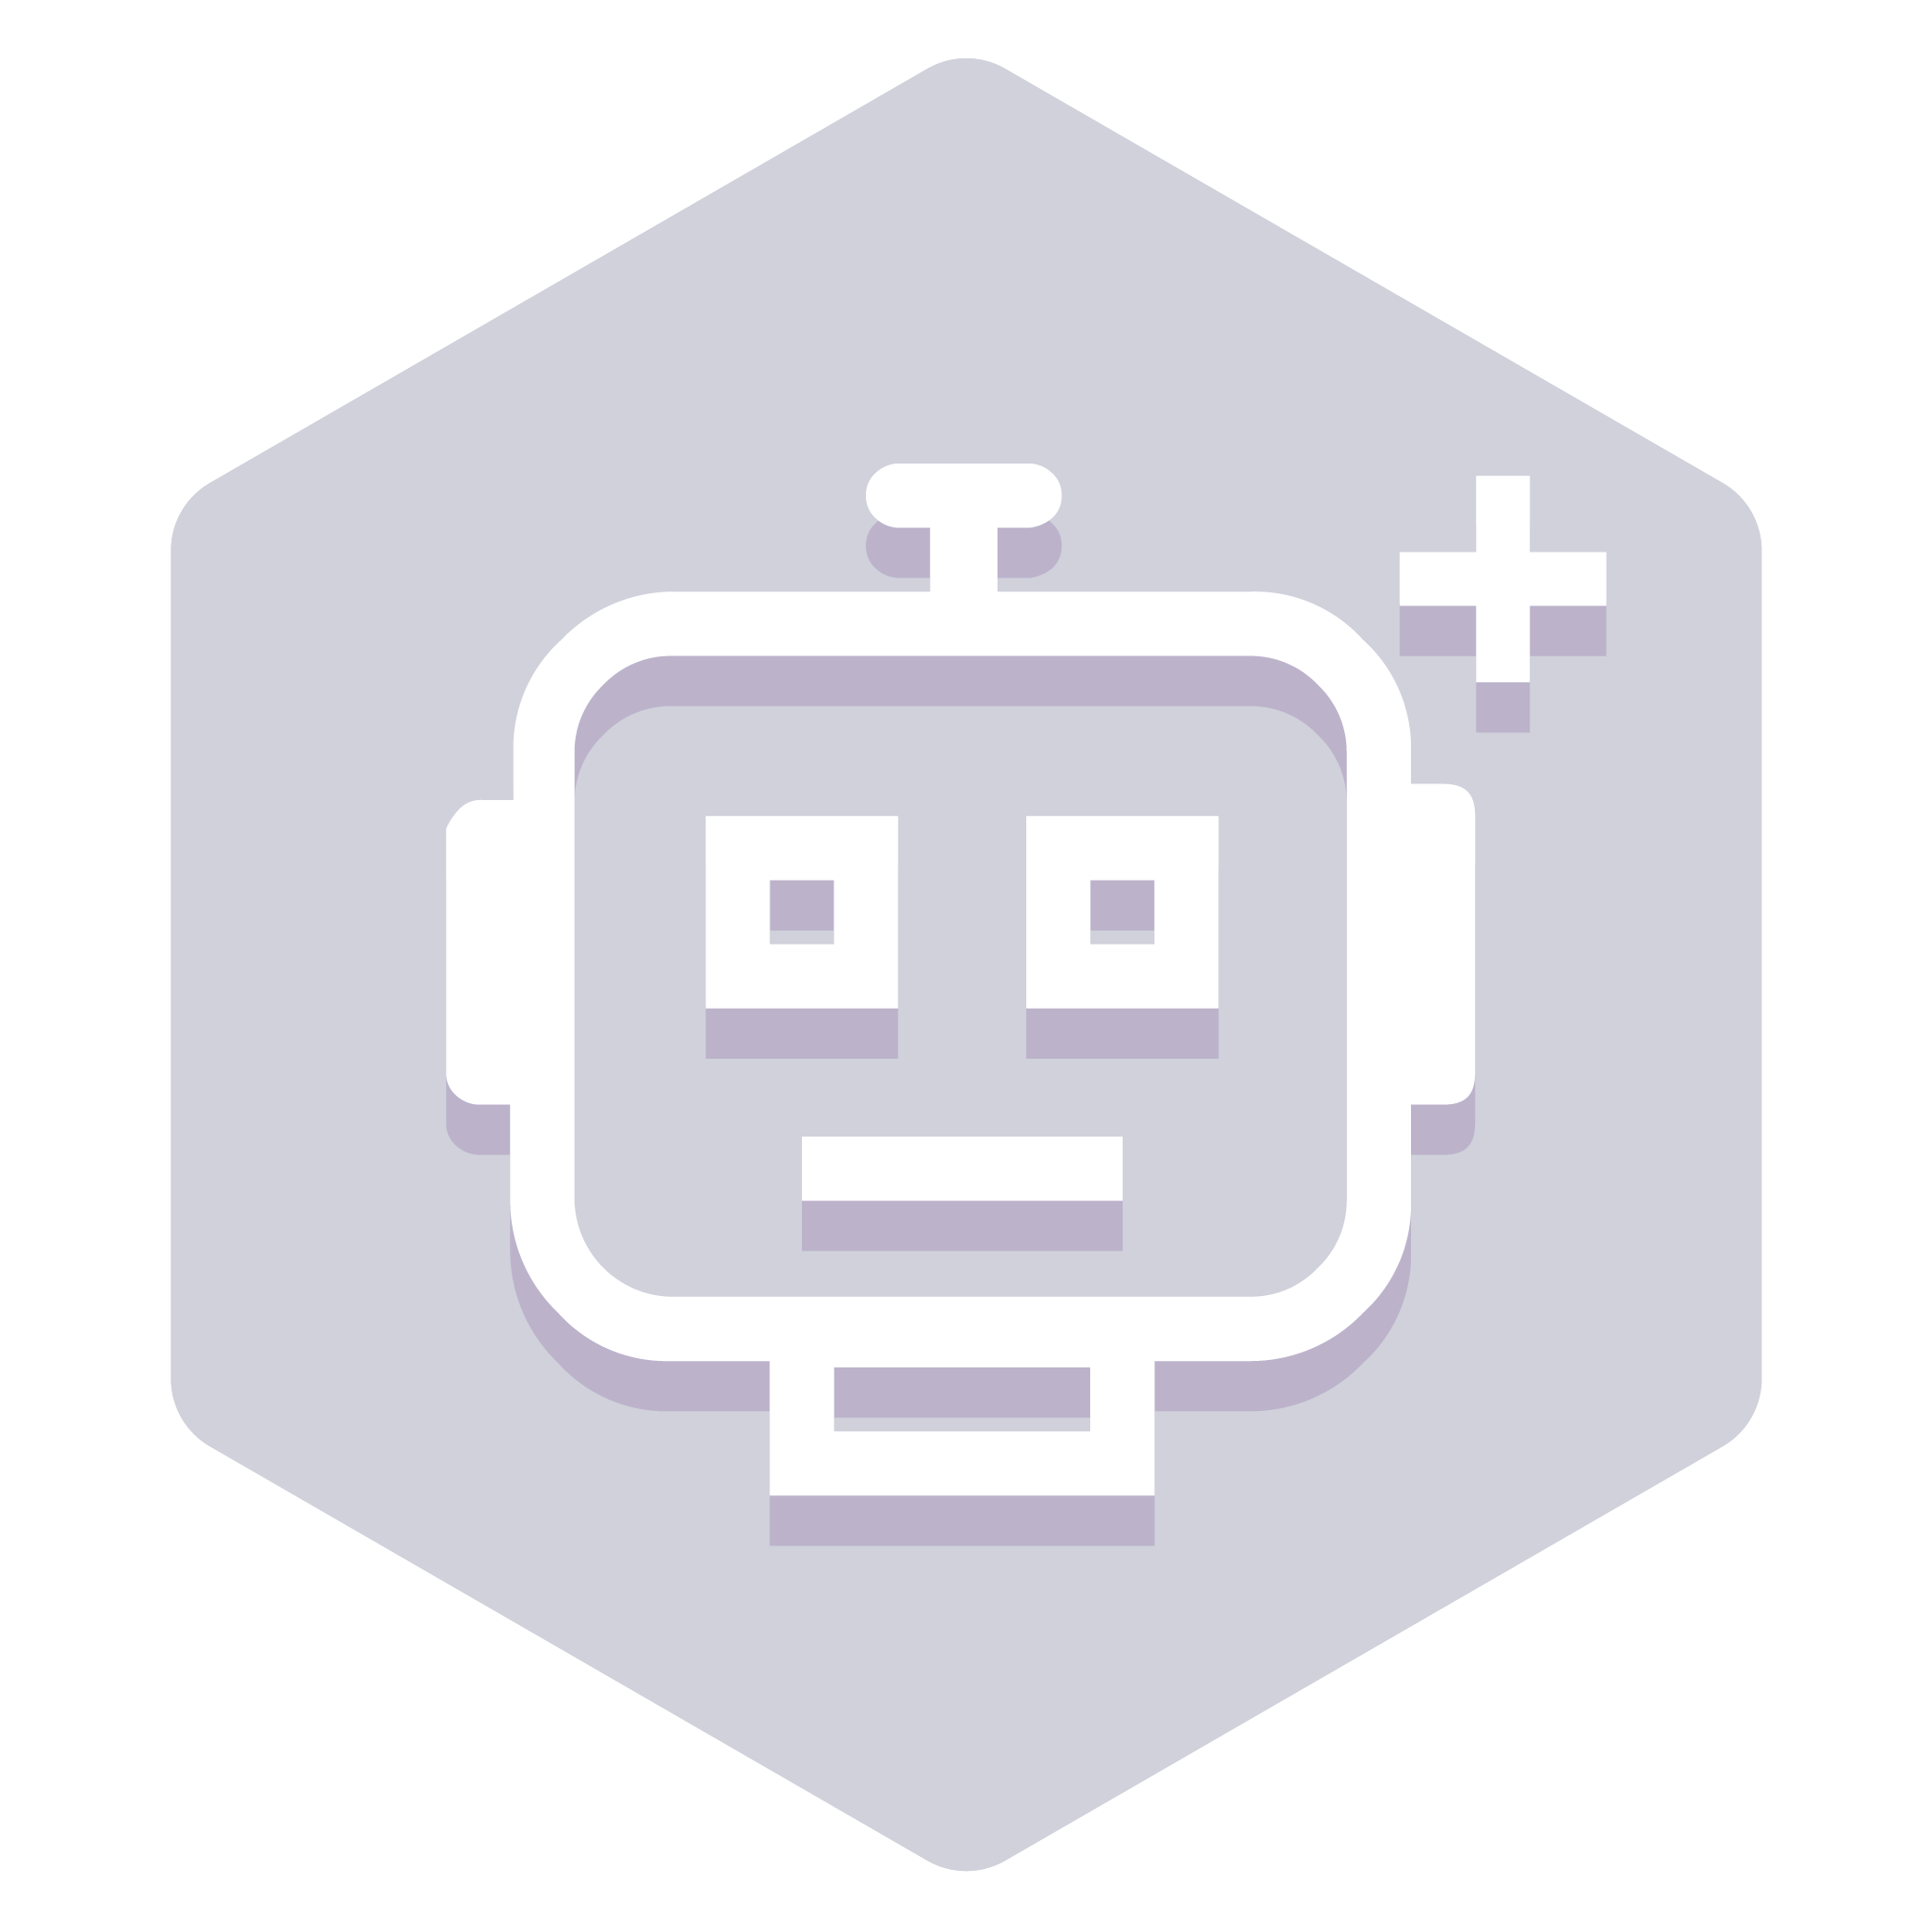 mission badge: Robotics solution development for Citrix